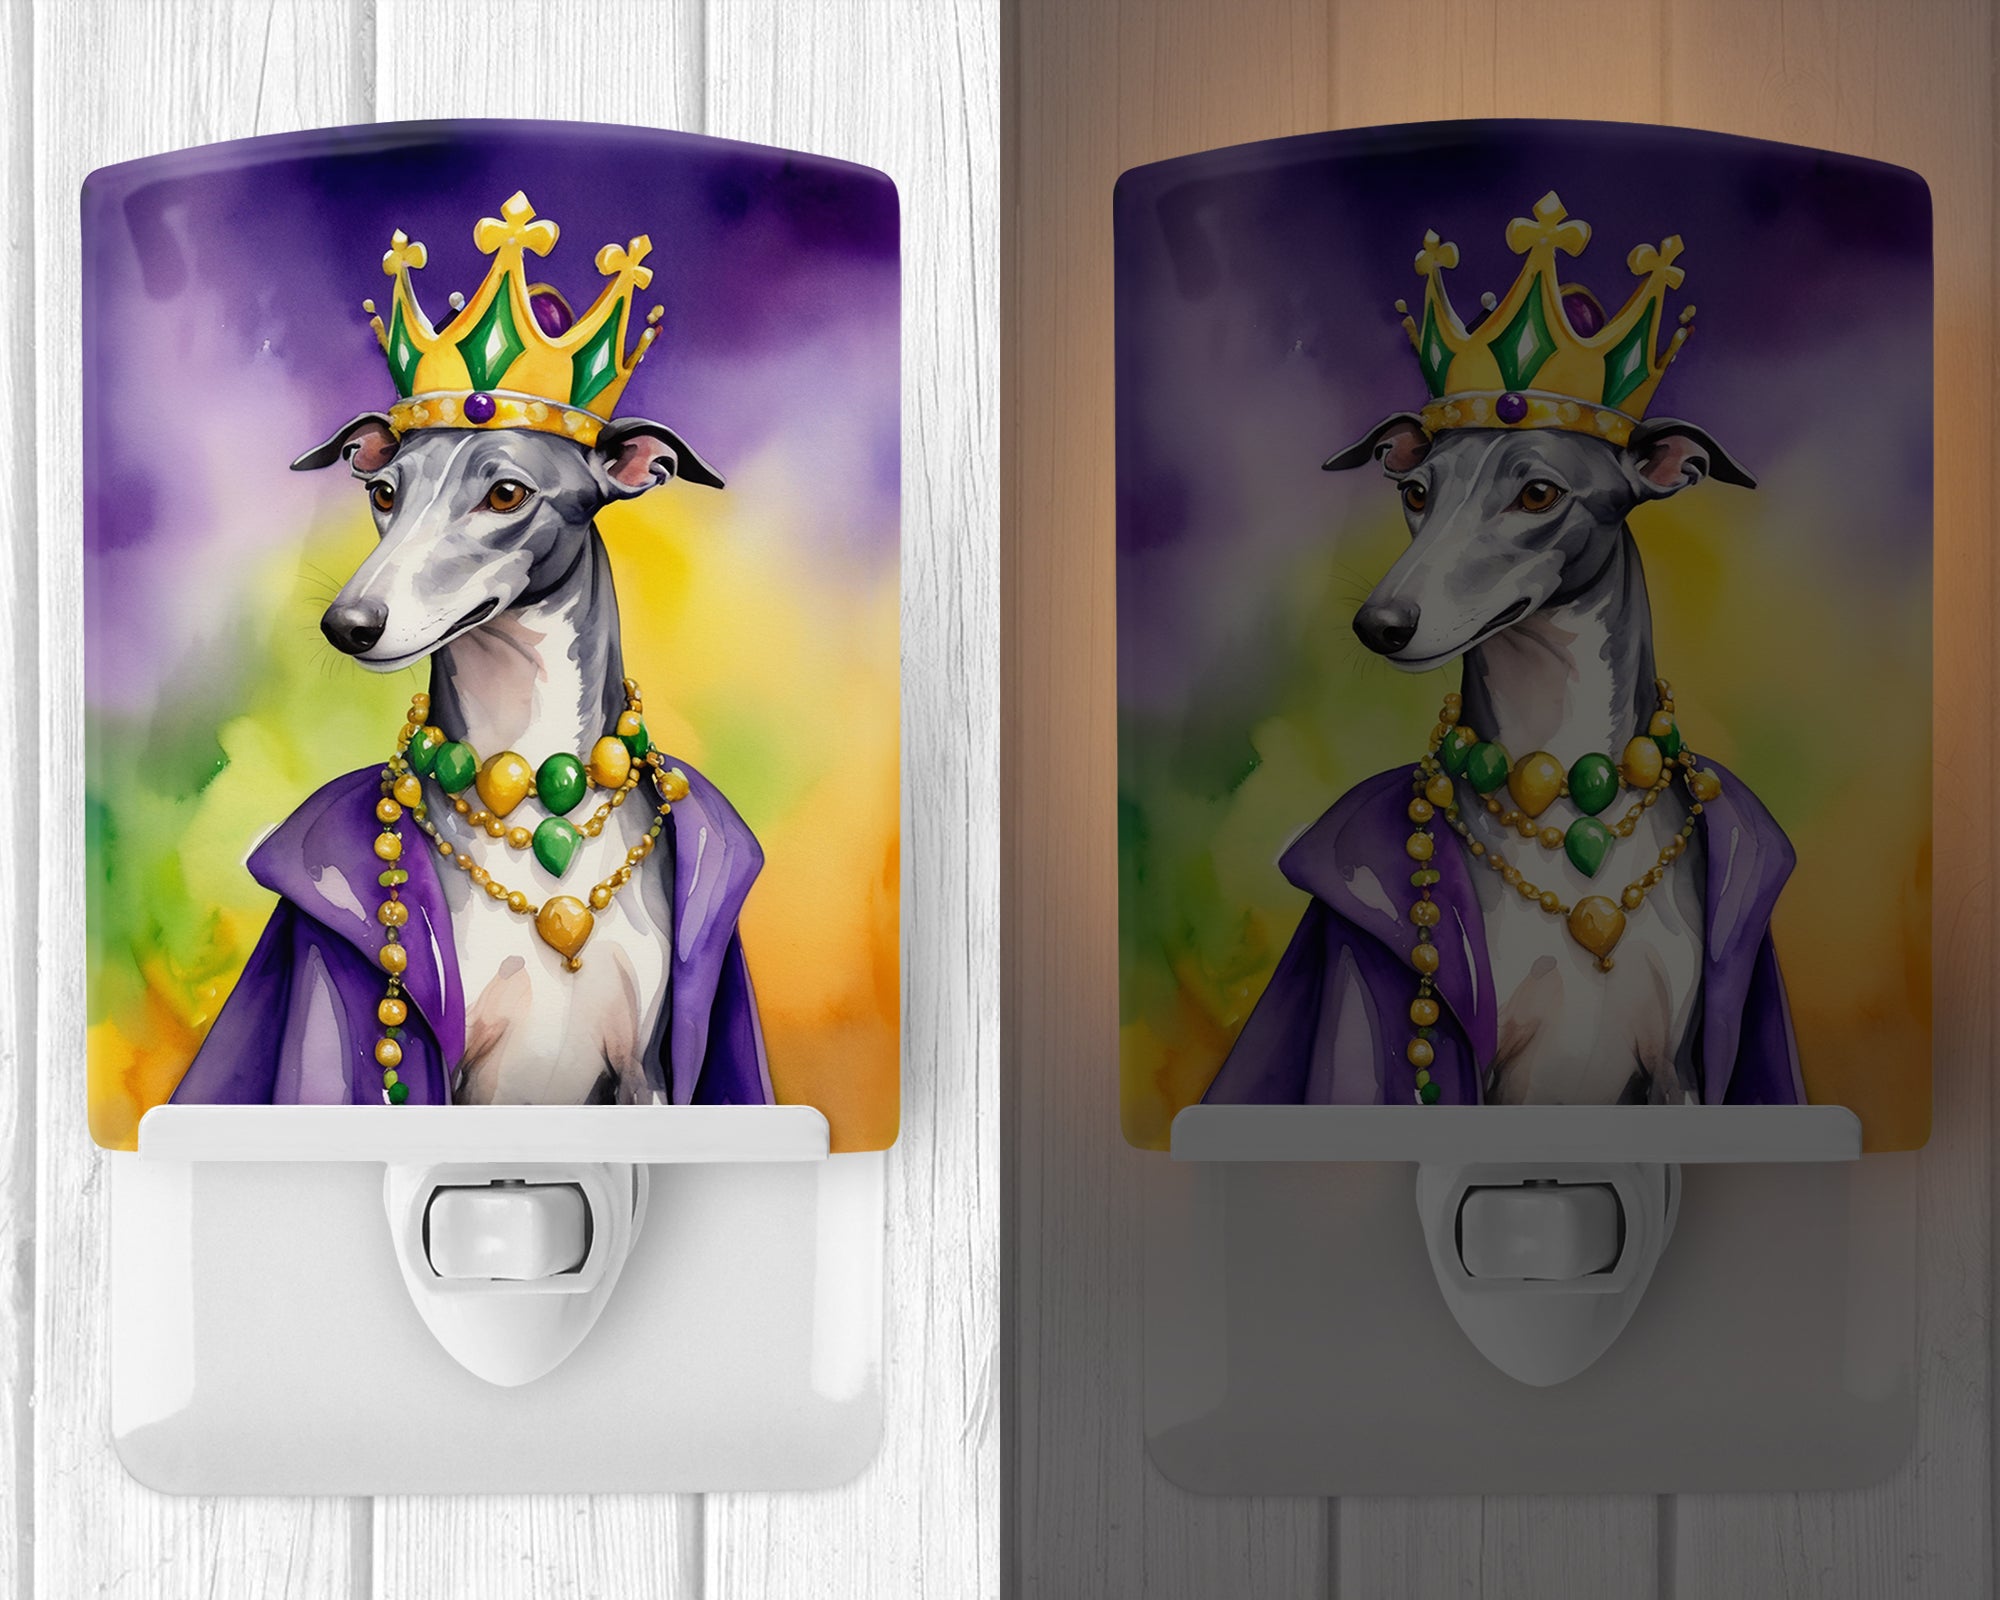 Buy this Greyhound King of Mardi Gras Ceramic Night Light